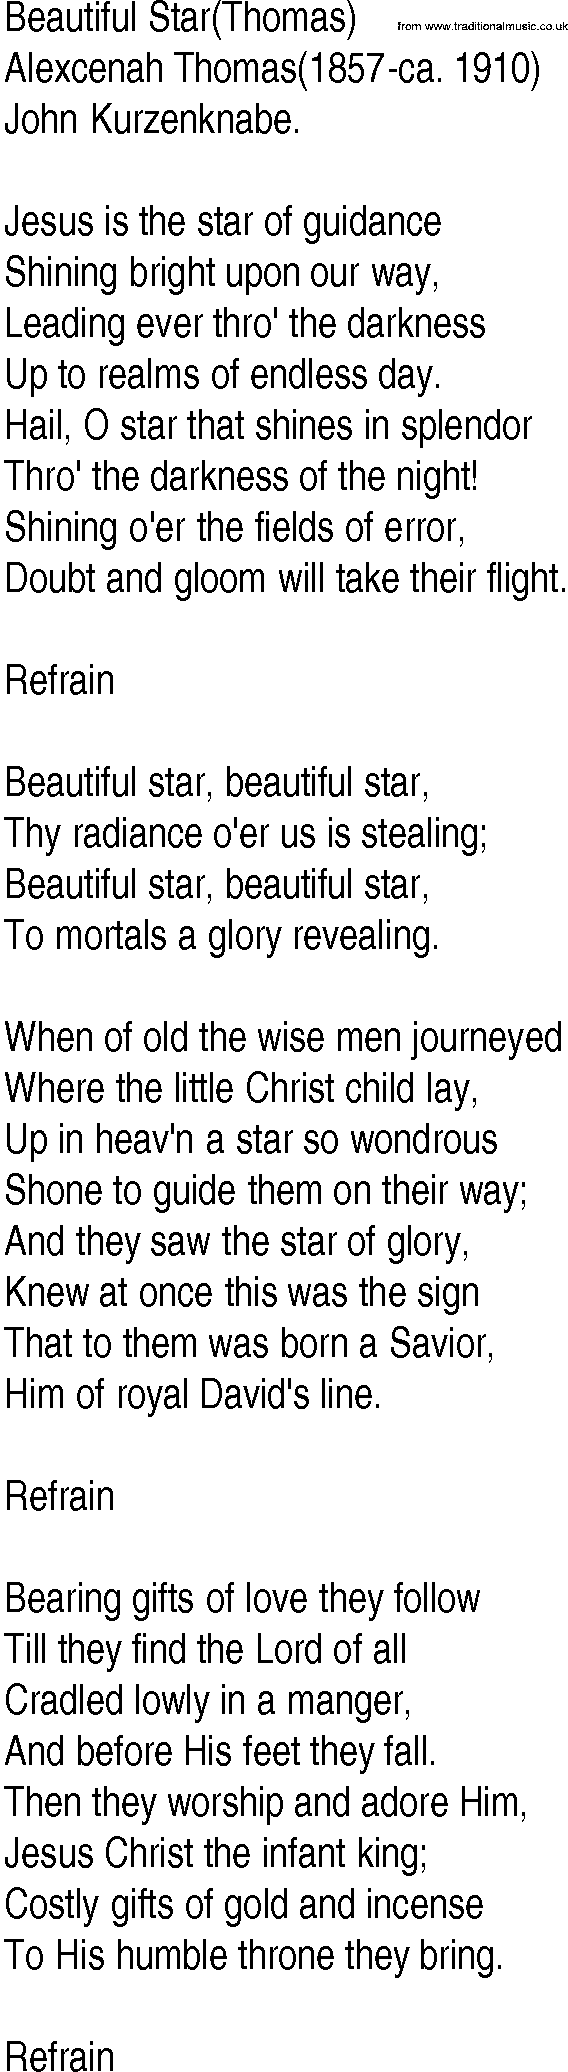 Hymn and Gospel Song: Beautiful Star(Thomas) by Alexcenah Thomasca lyrics